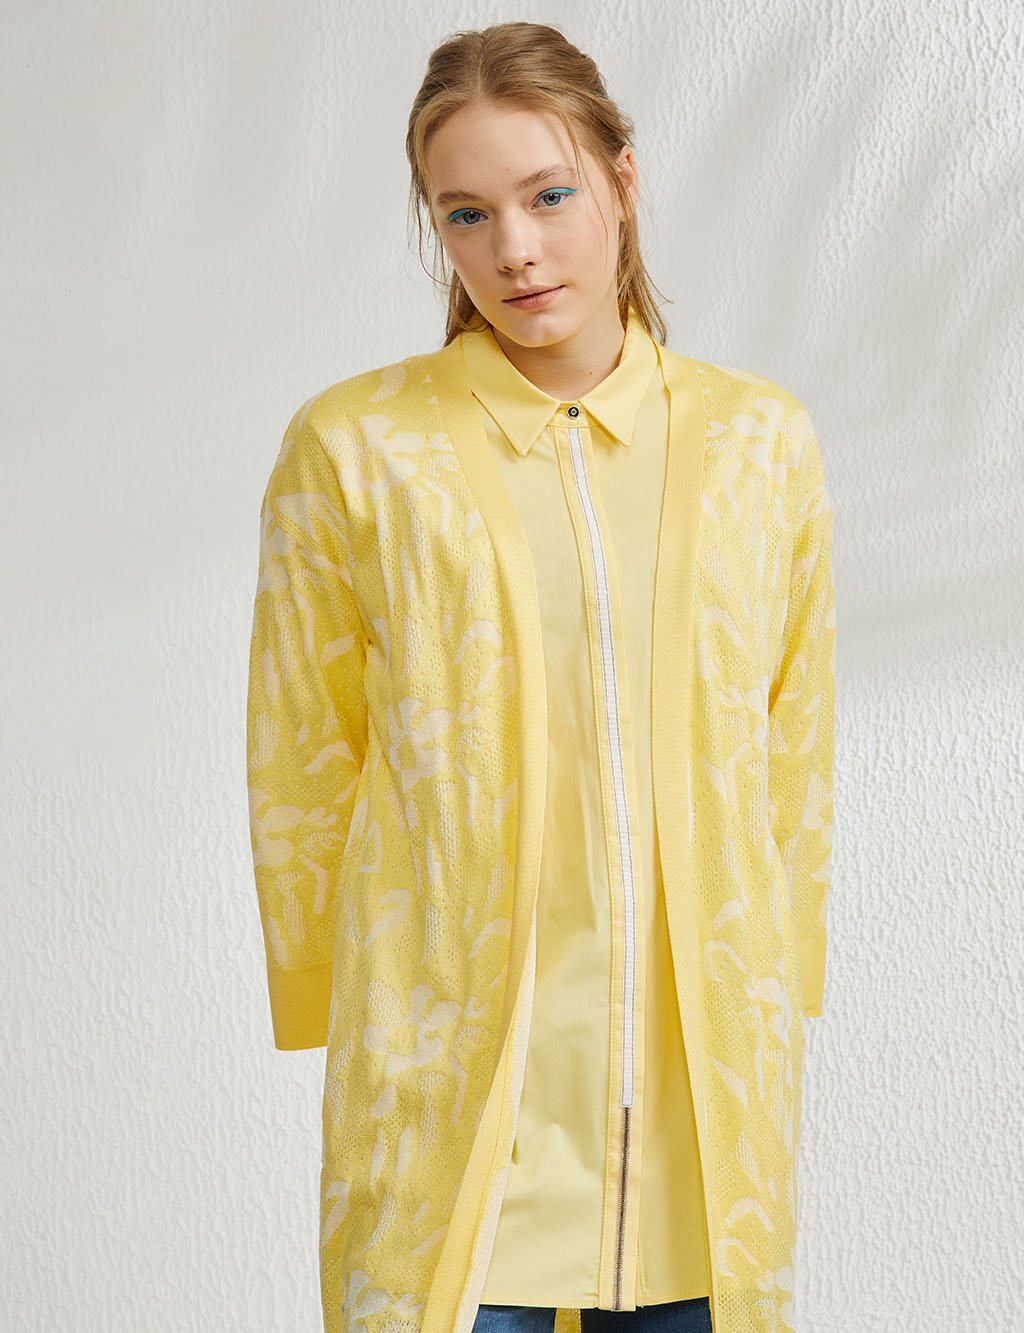 Abstract Patterned Kimono Sleeve Knitwear Cardigan Yellow-White